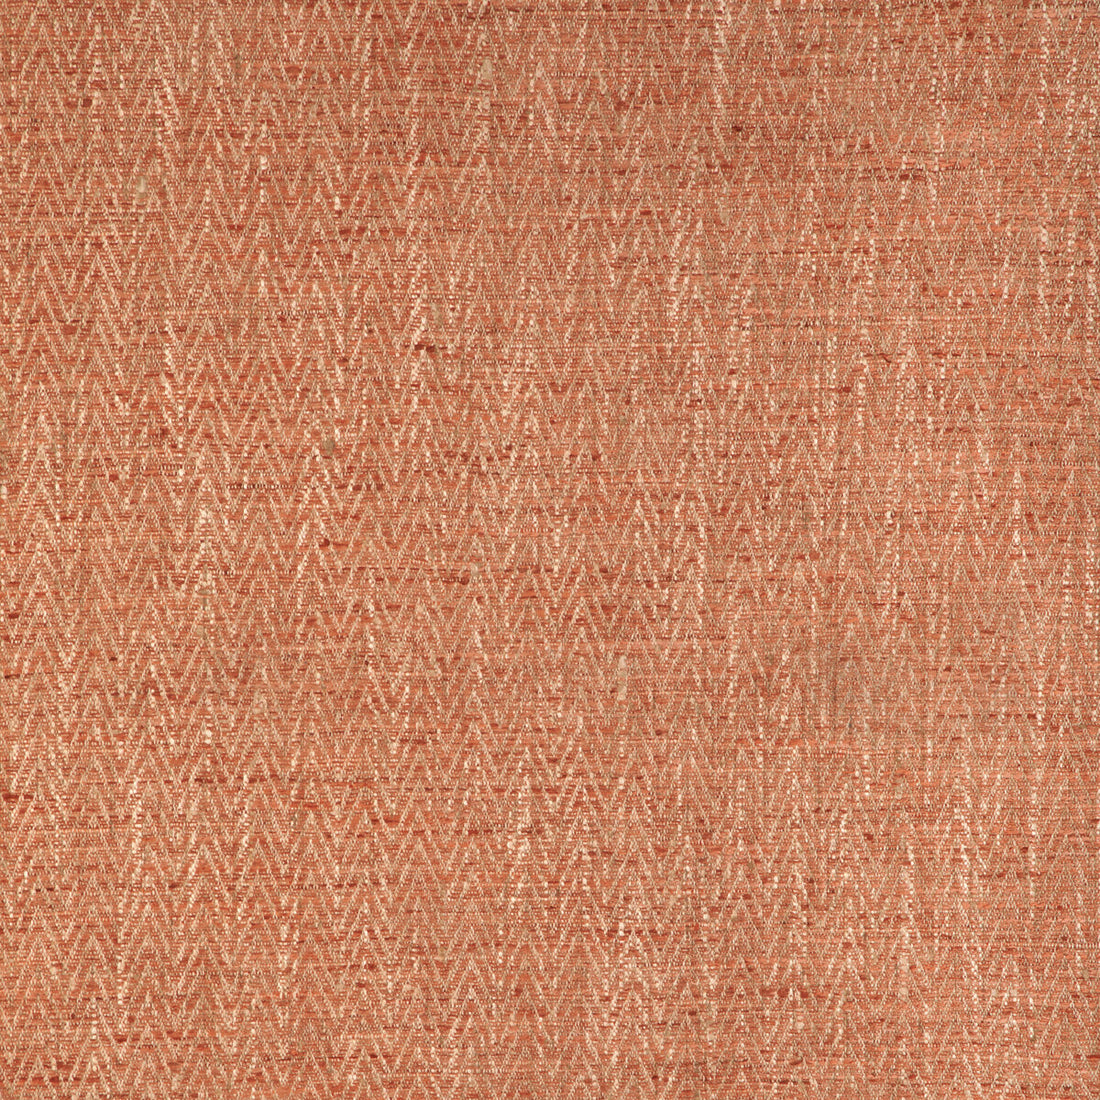 Kravet Smart fabric in 34092-1624 color - pattern 34092.1624.0 - by Kravet Smart